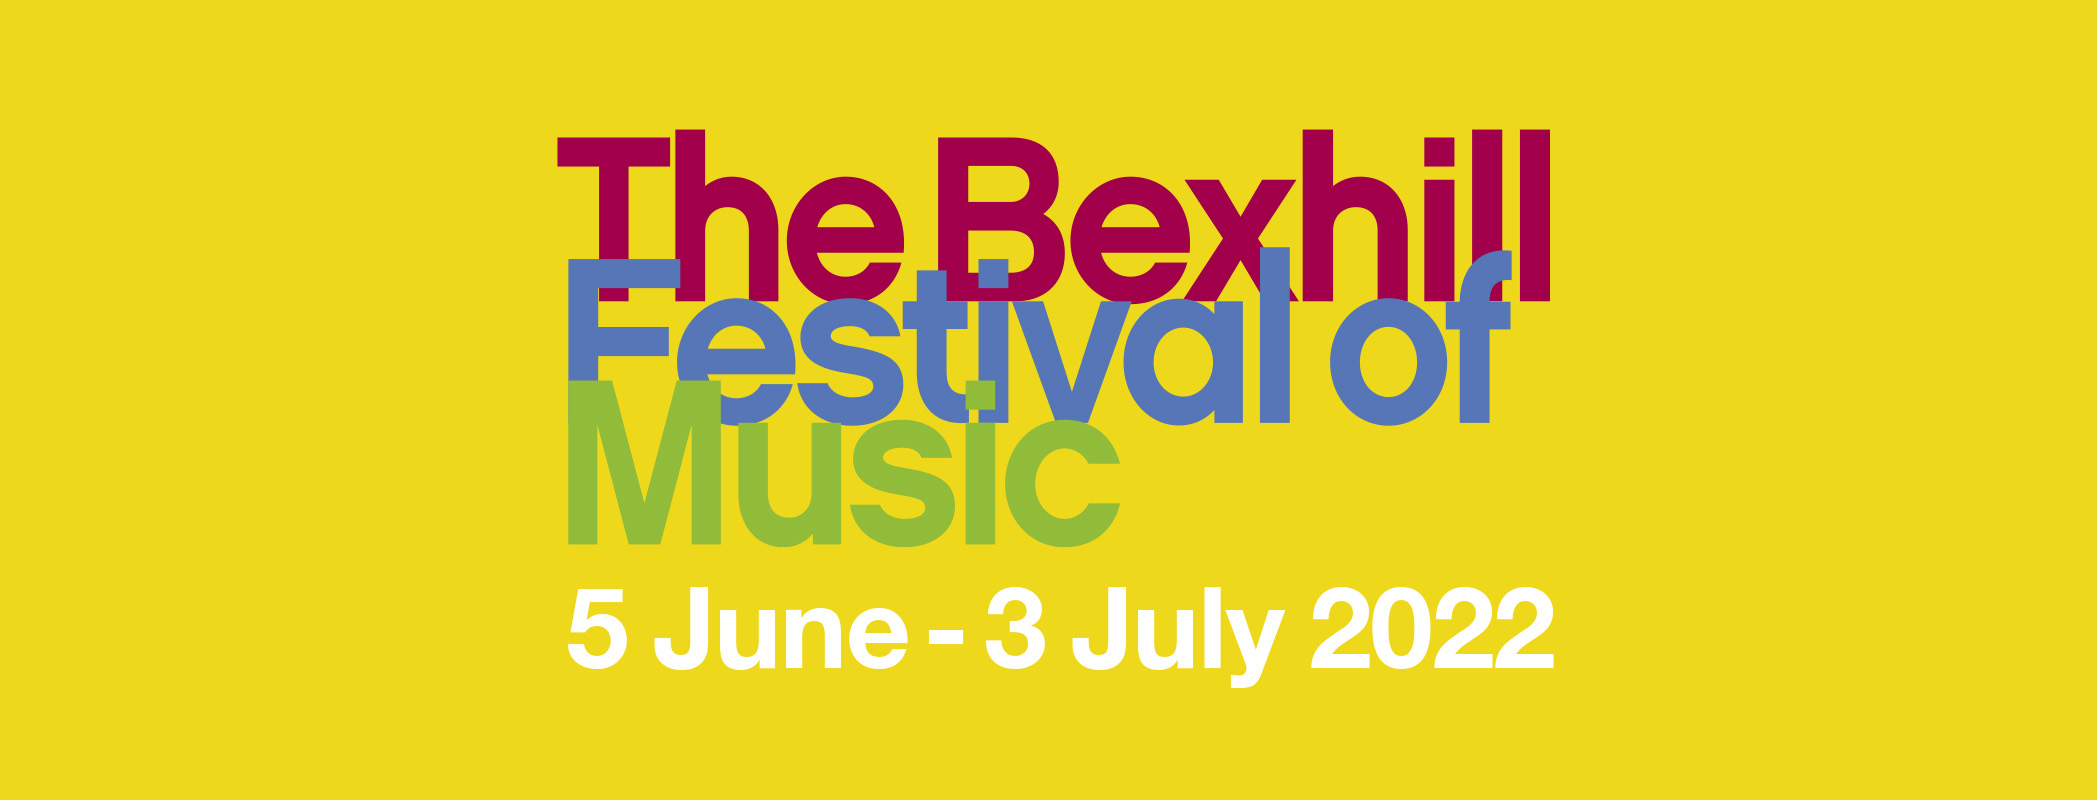 Bexhill Festival of Music logo